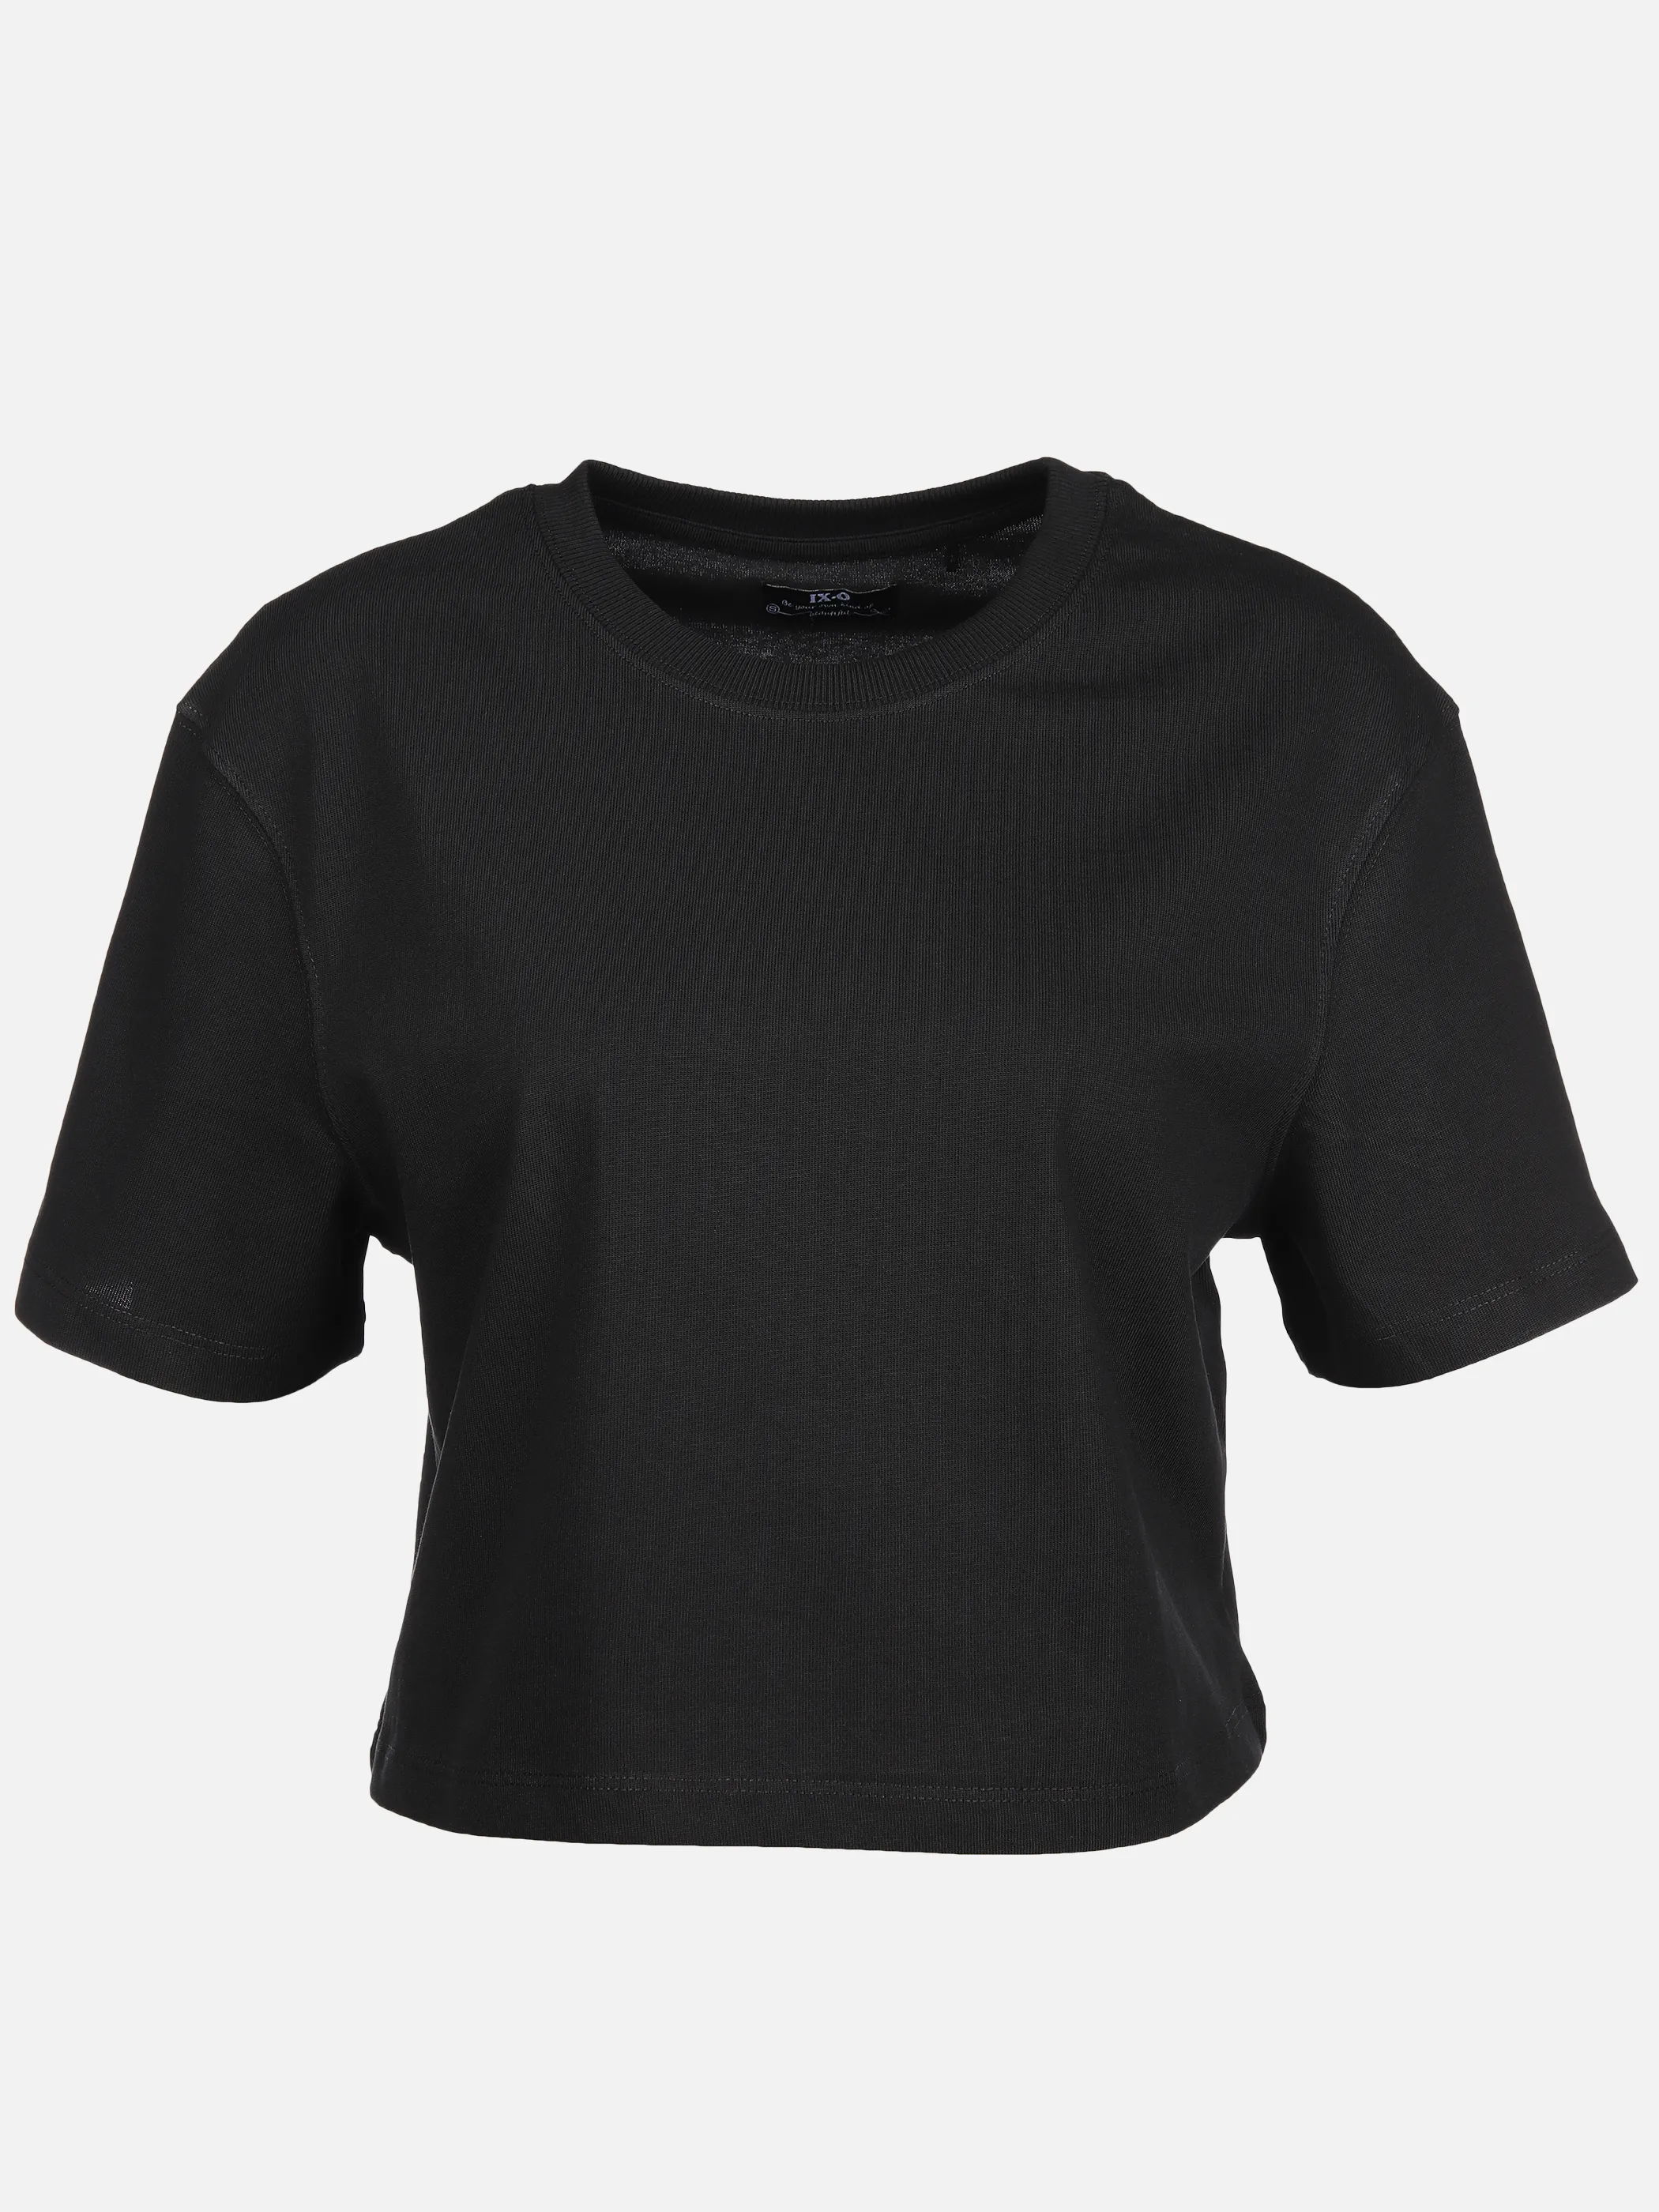 IX-O YF-Da T-Shirt Schwarz 890371 BLACK 1